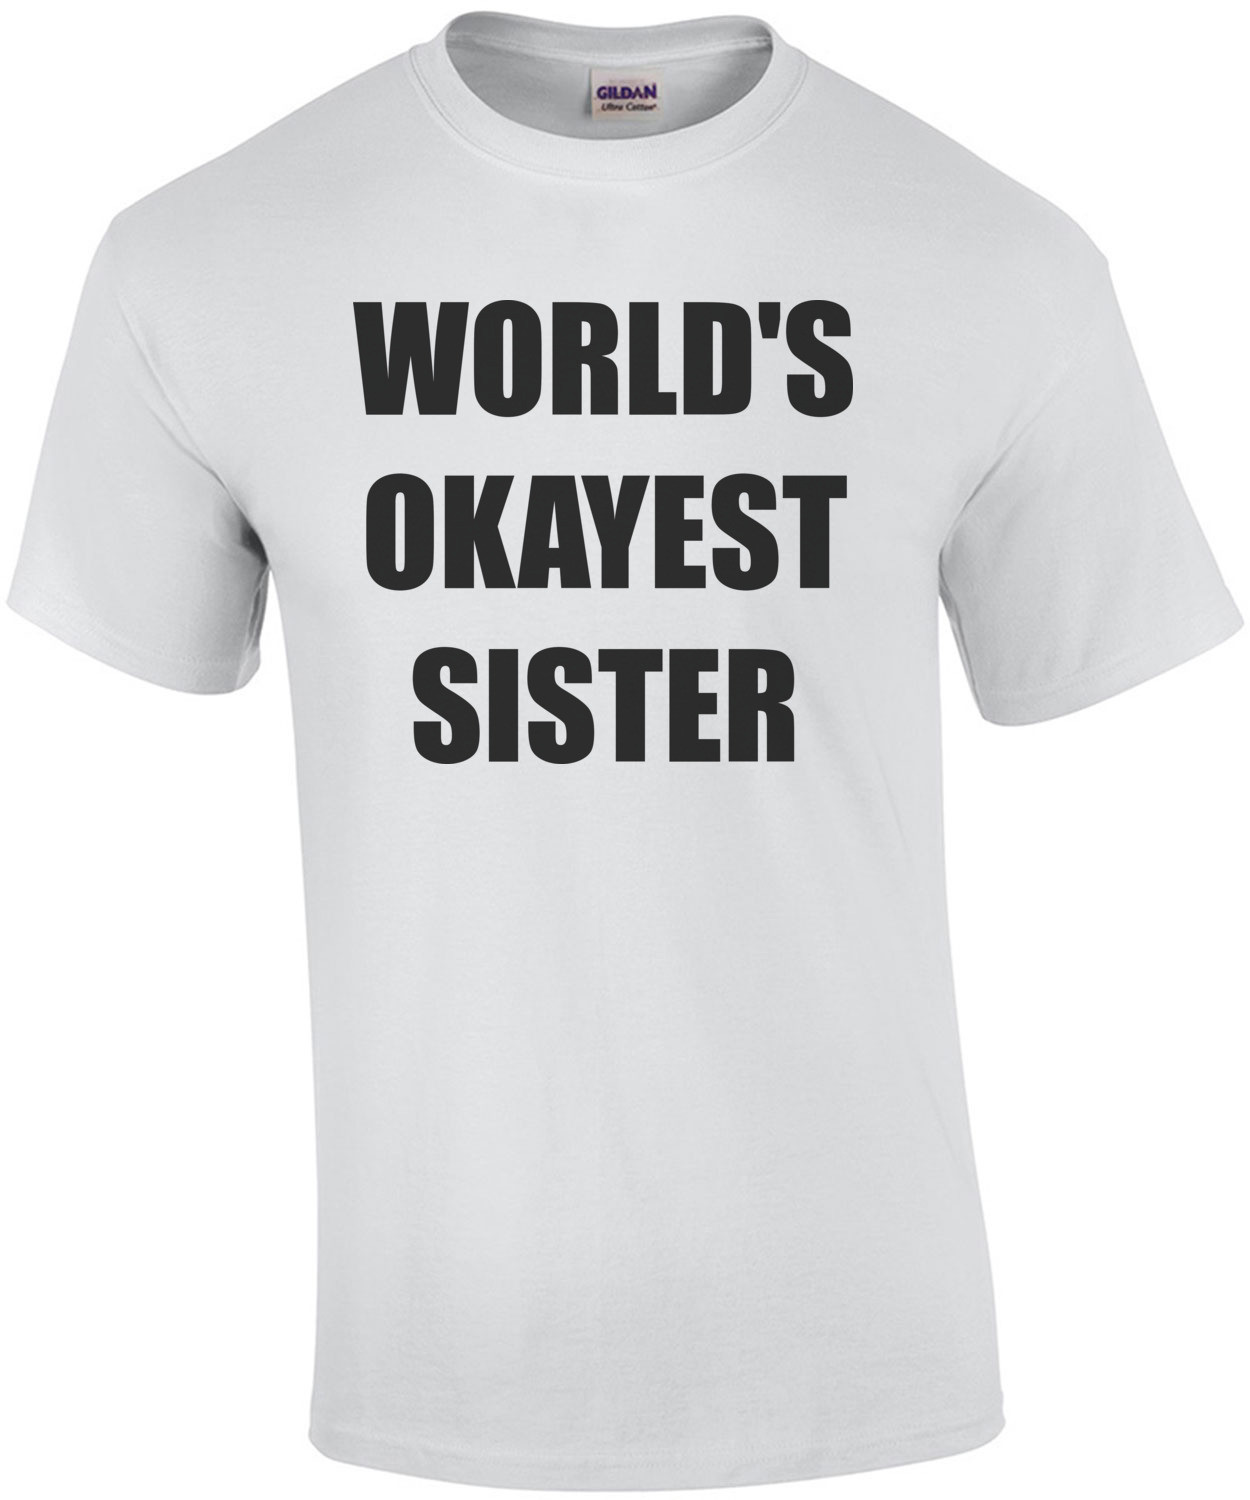 WORLD'S OKAYEST SISTER Shirt